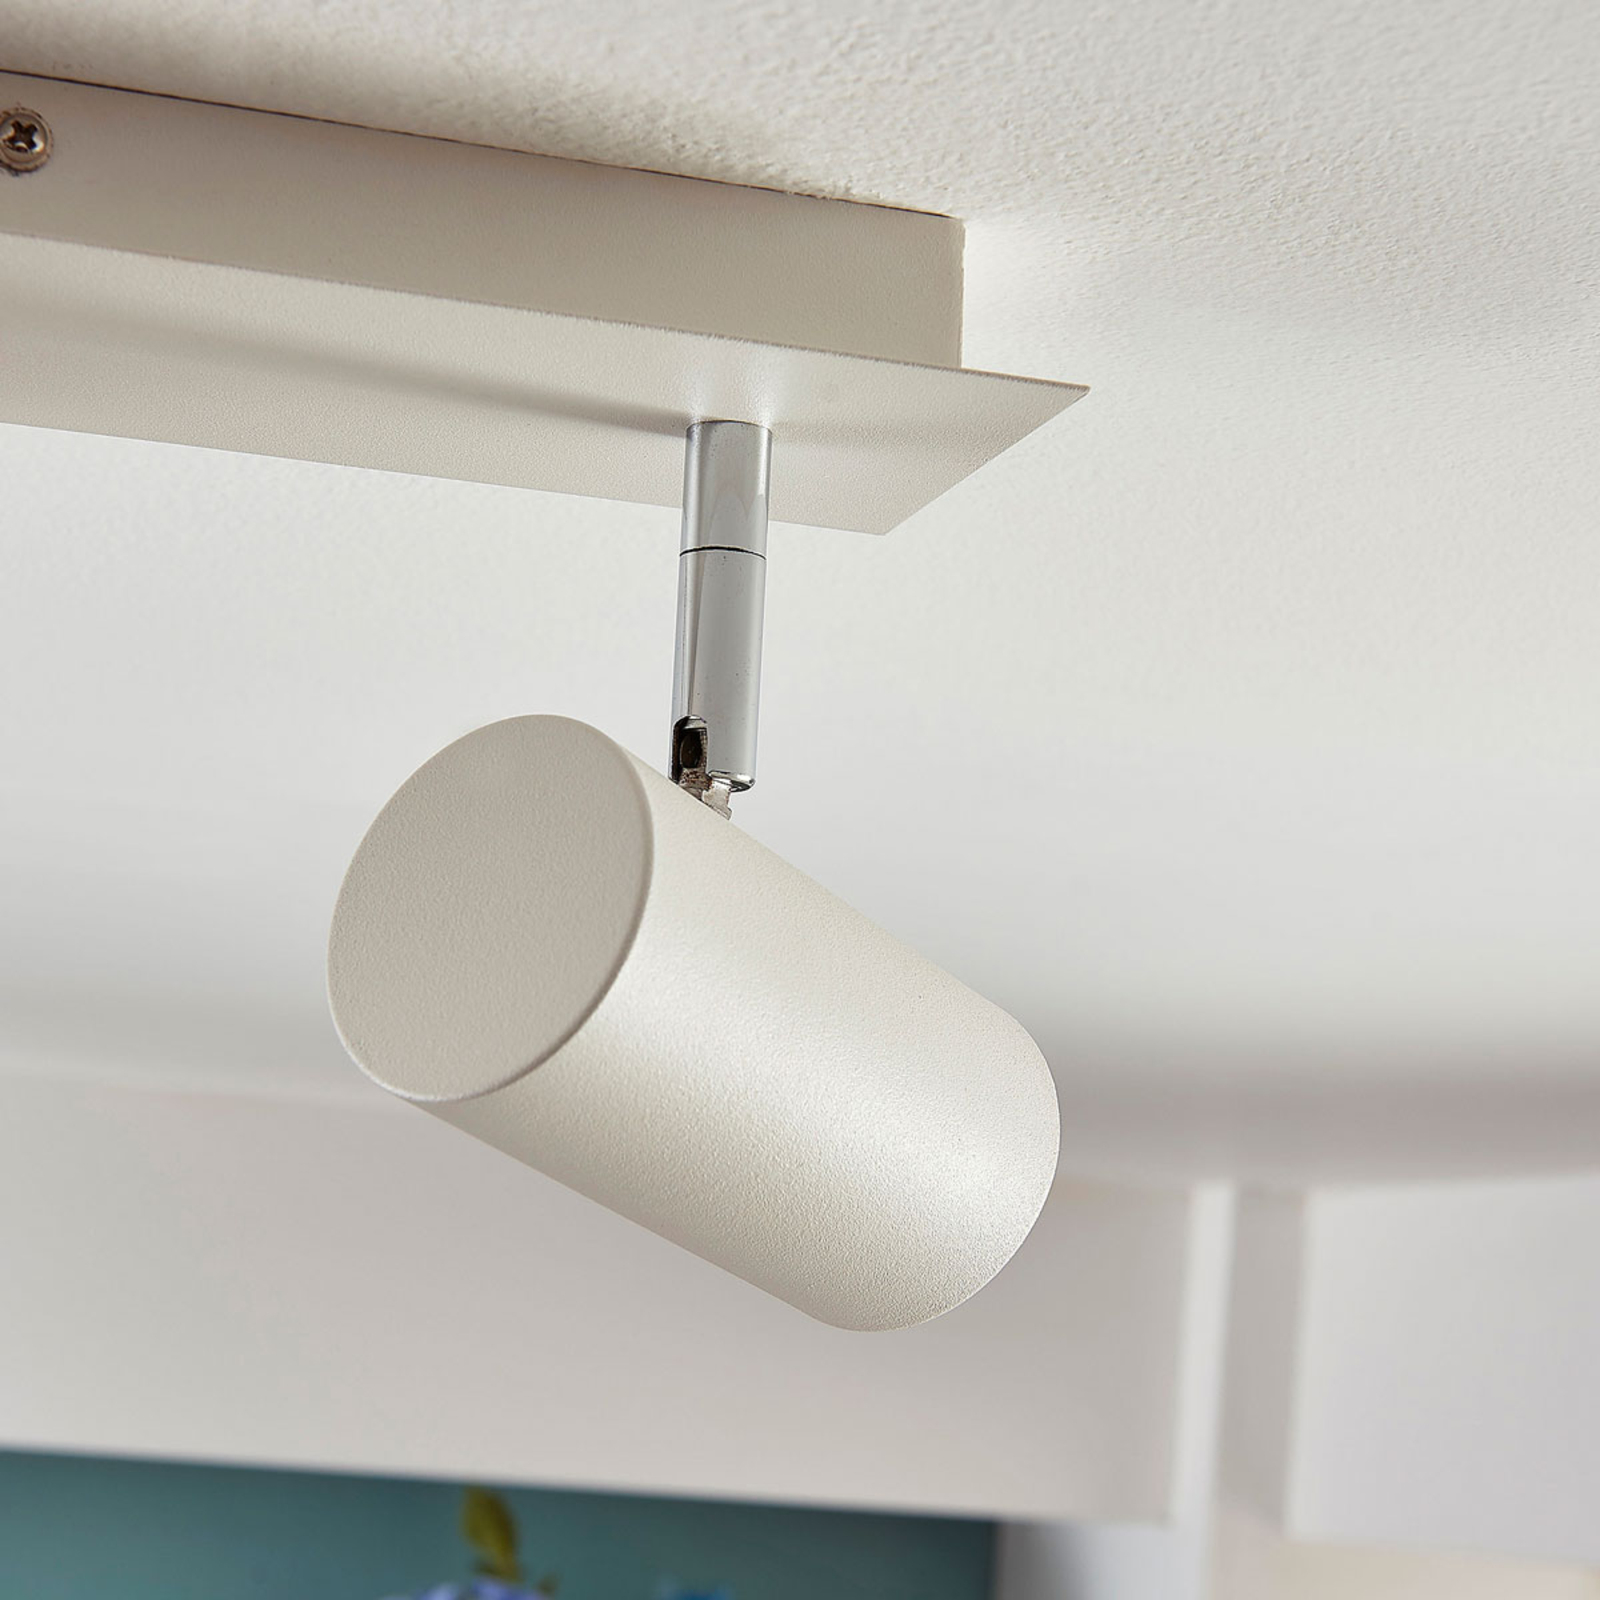 Iluk 2-bulb LED spotlight for wall and ceiling